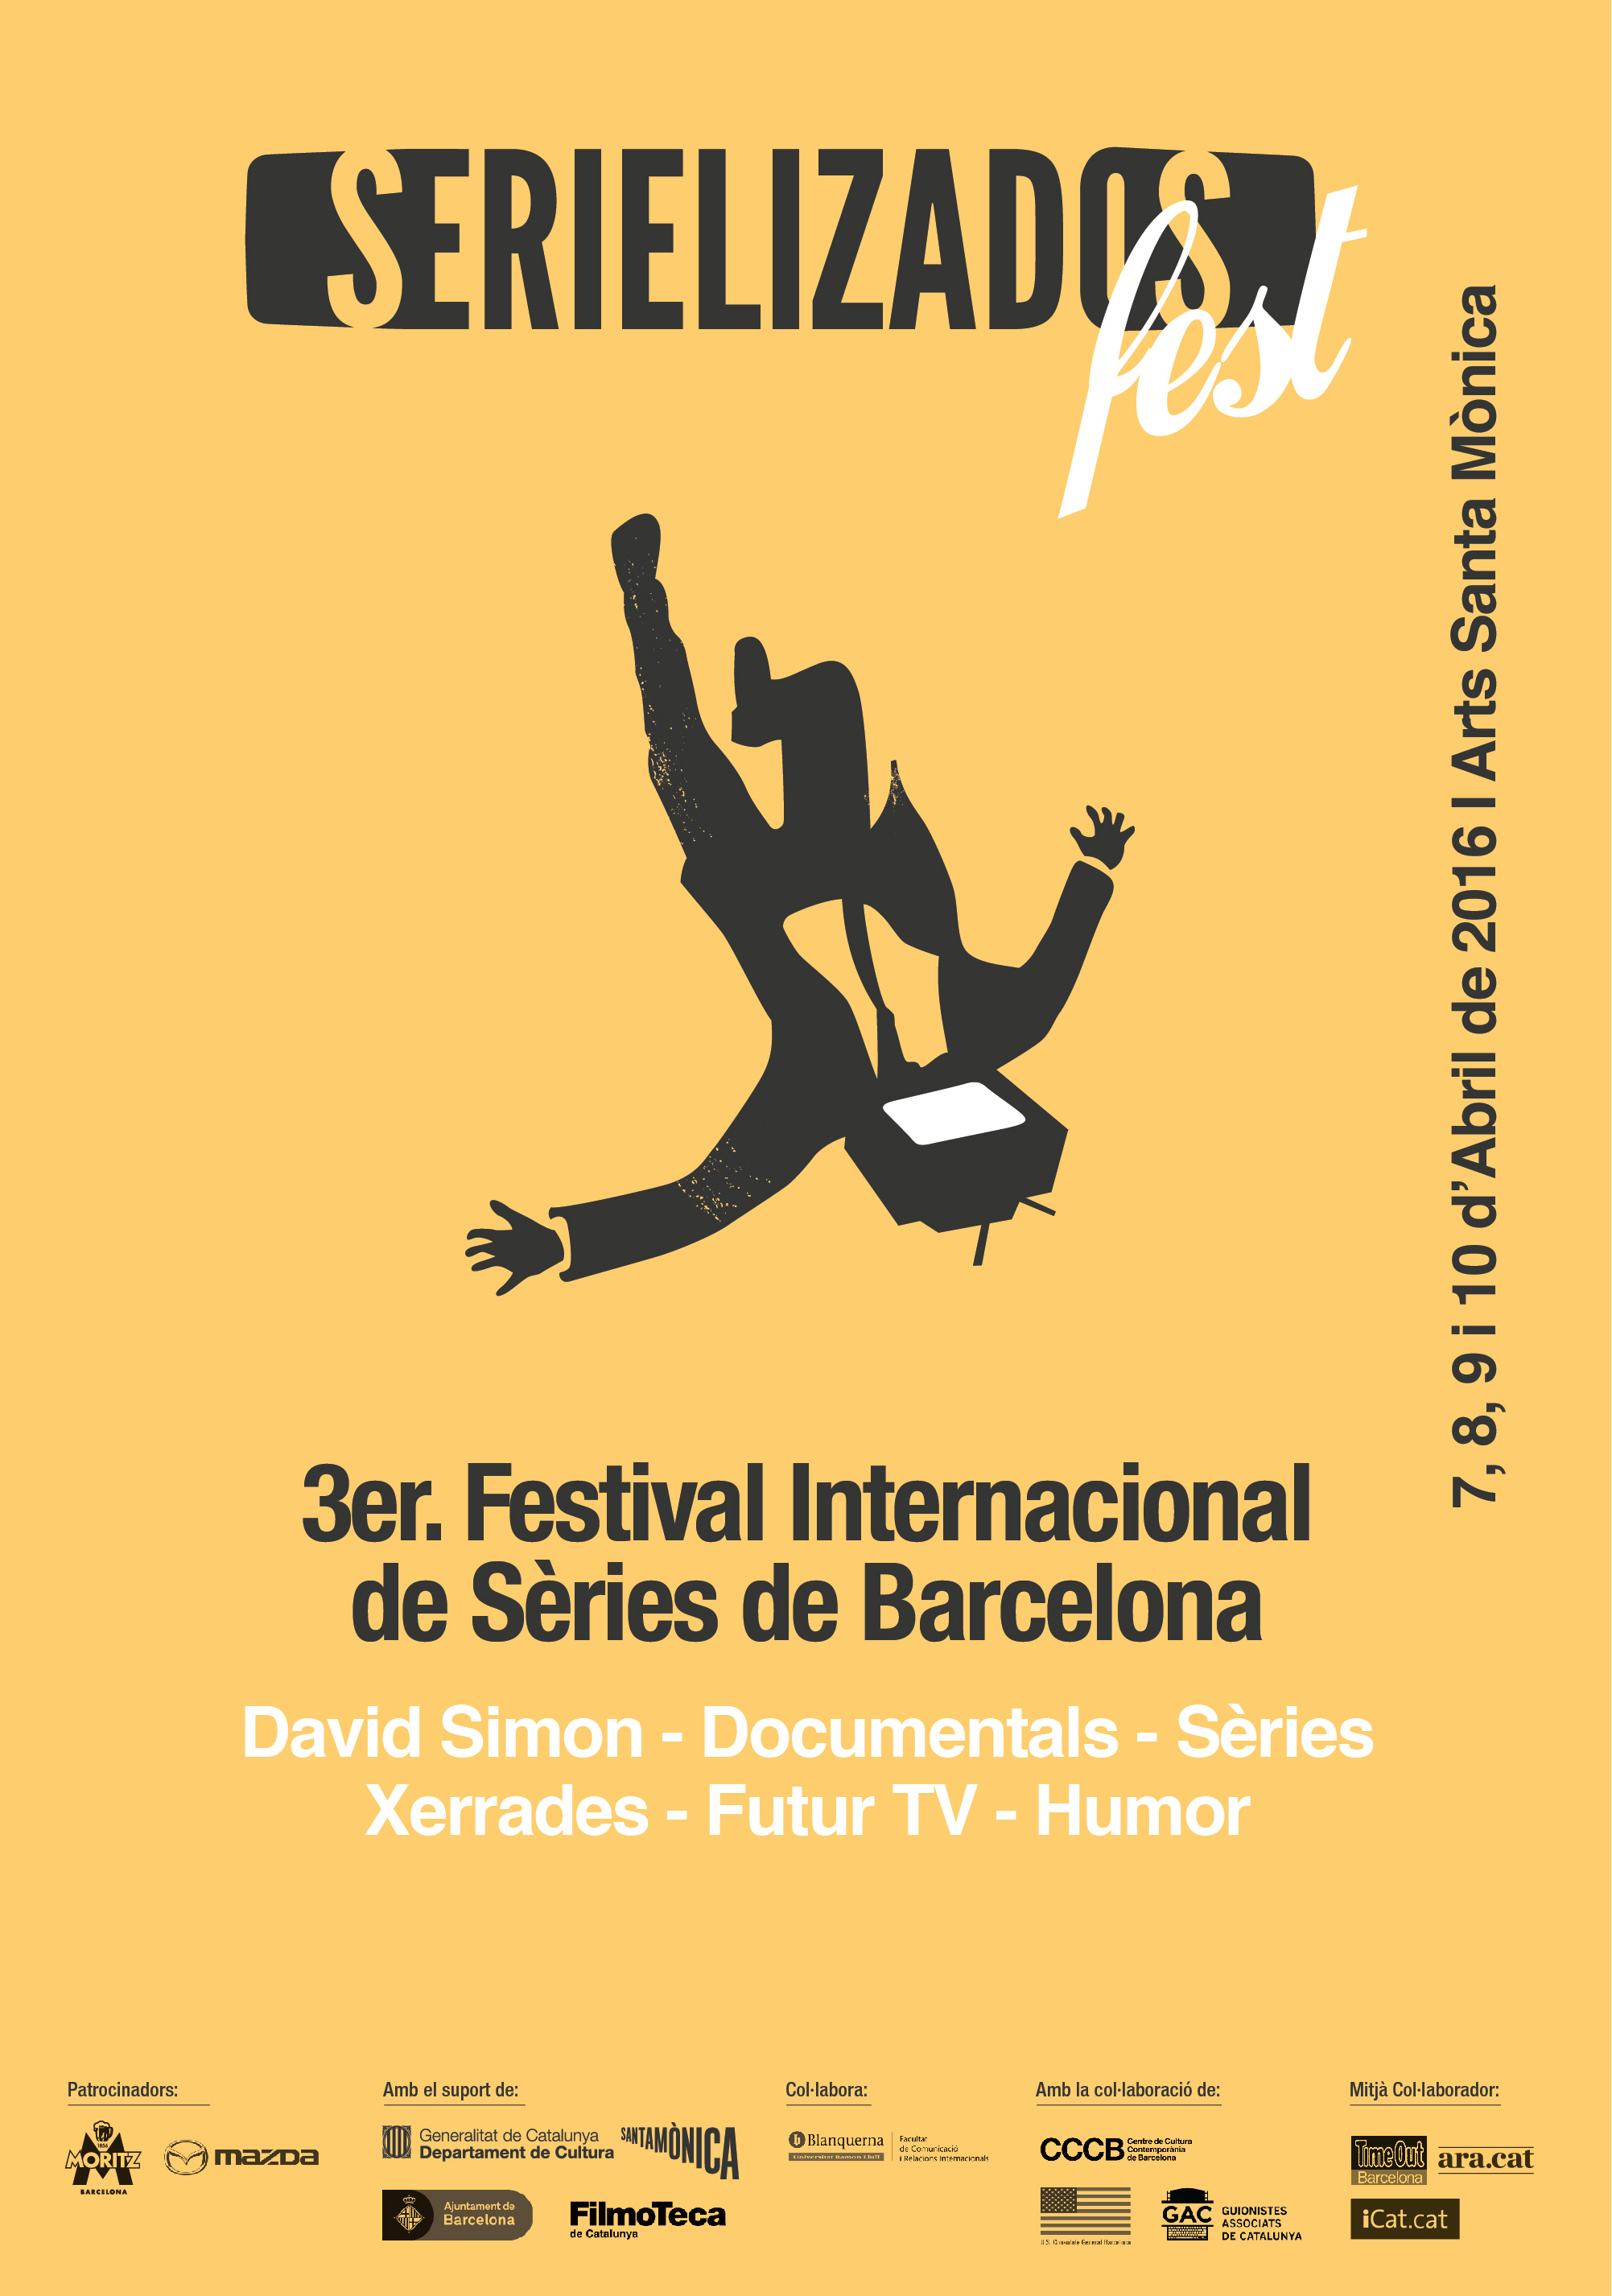 Serielizados Fest  10th International Series Festival